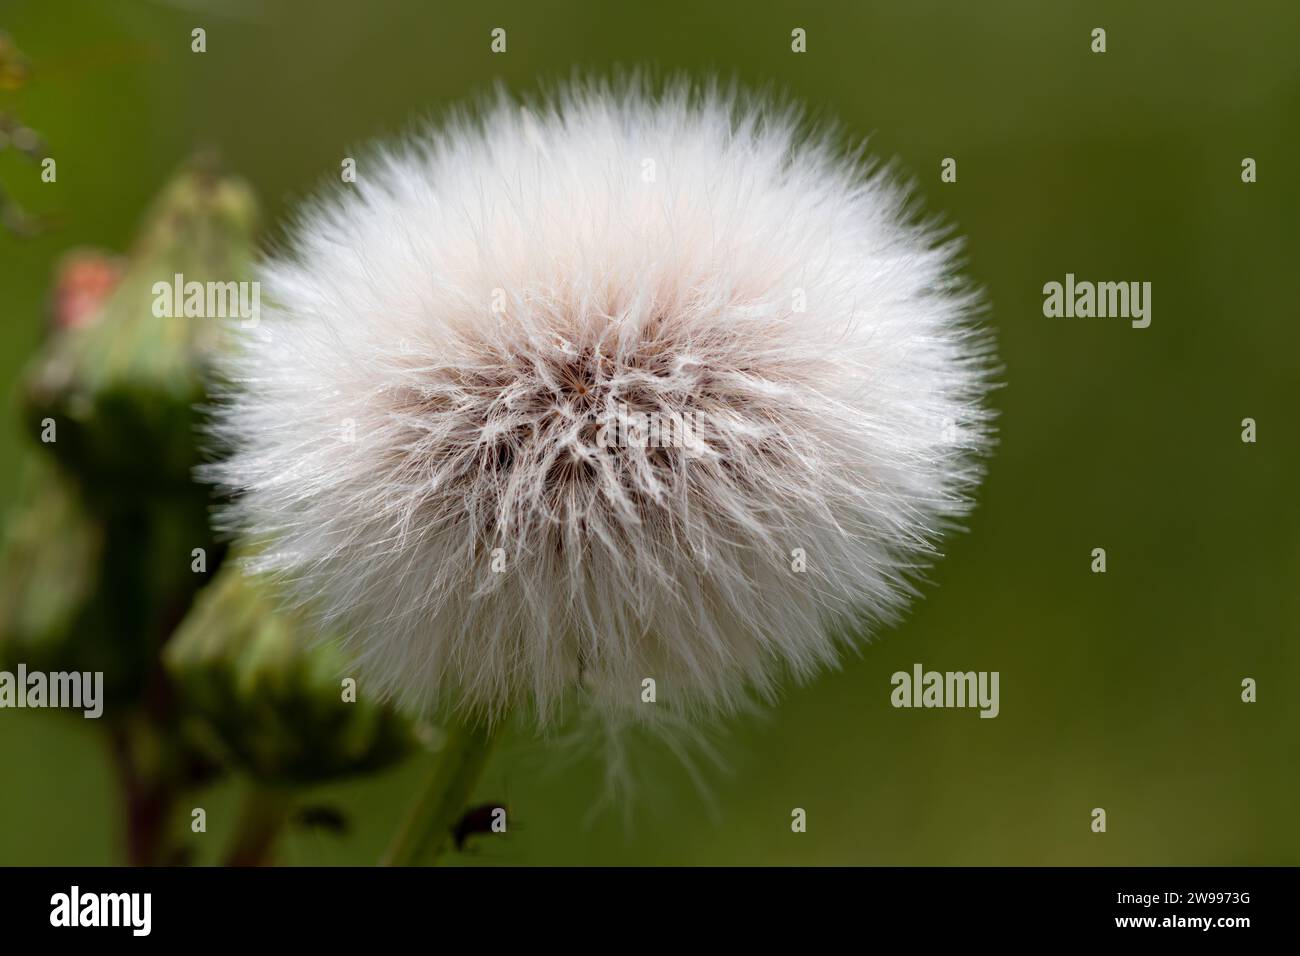 Urospermum picroides, dandelion seeds, white fluffy soft image Stock Photo